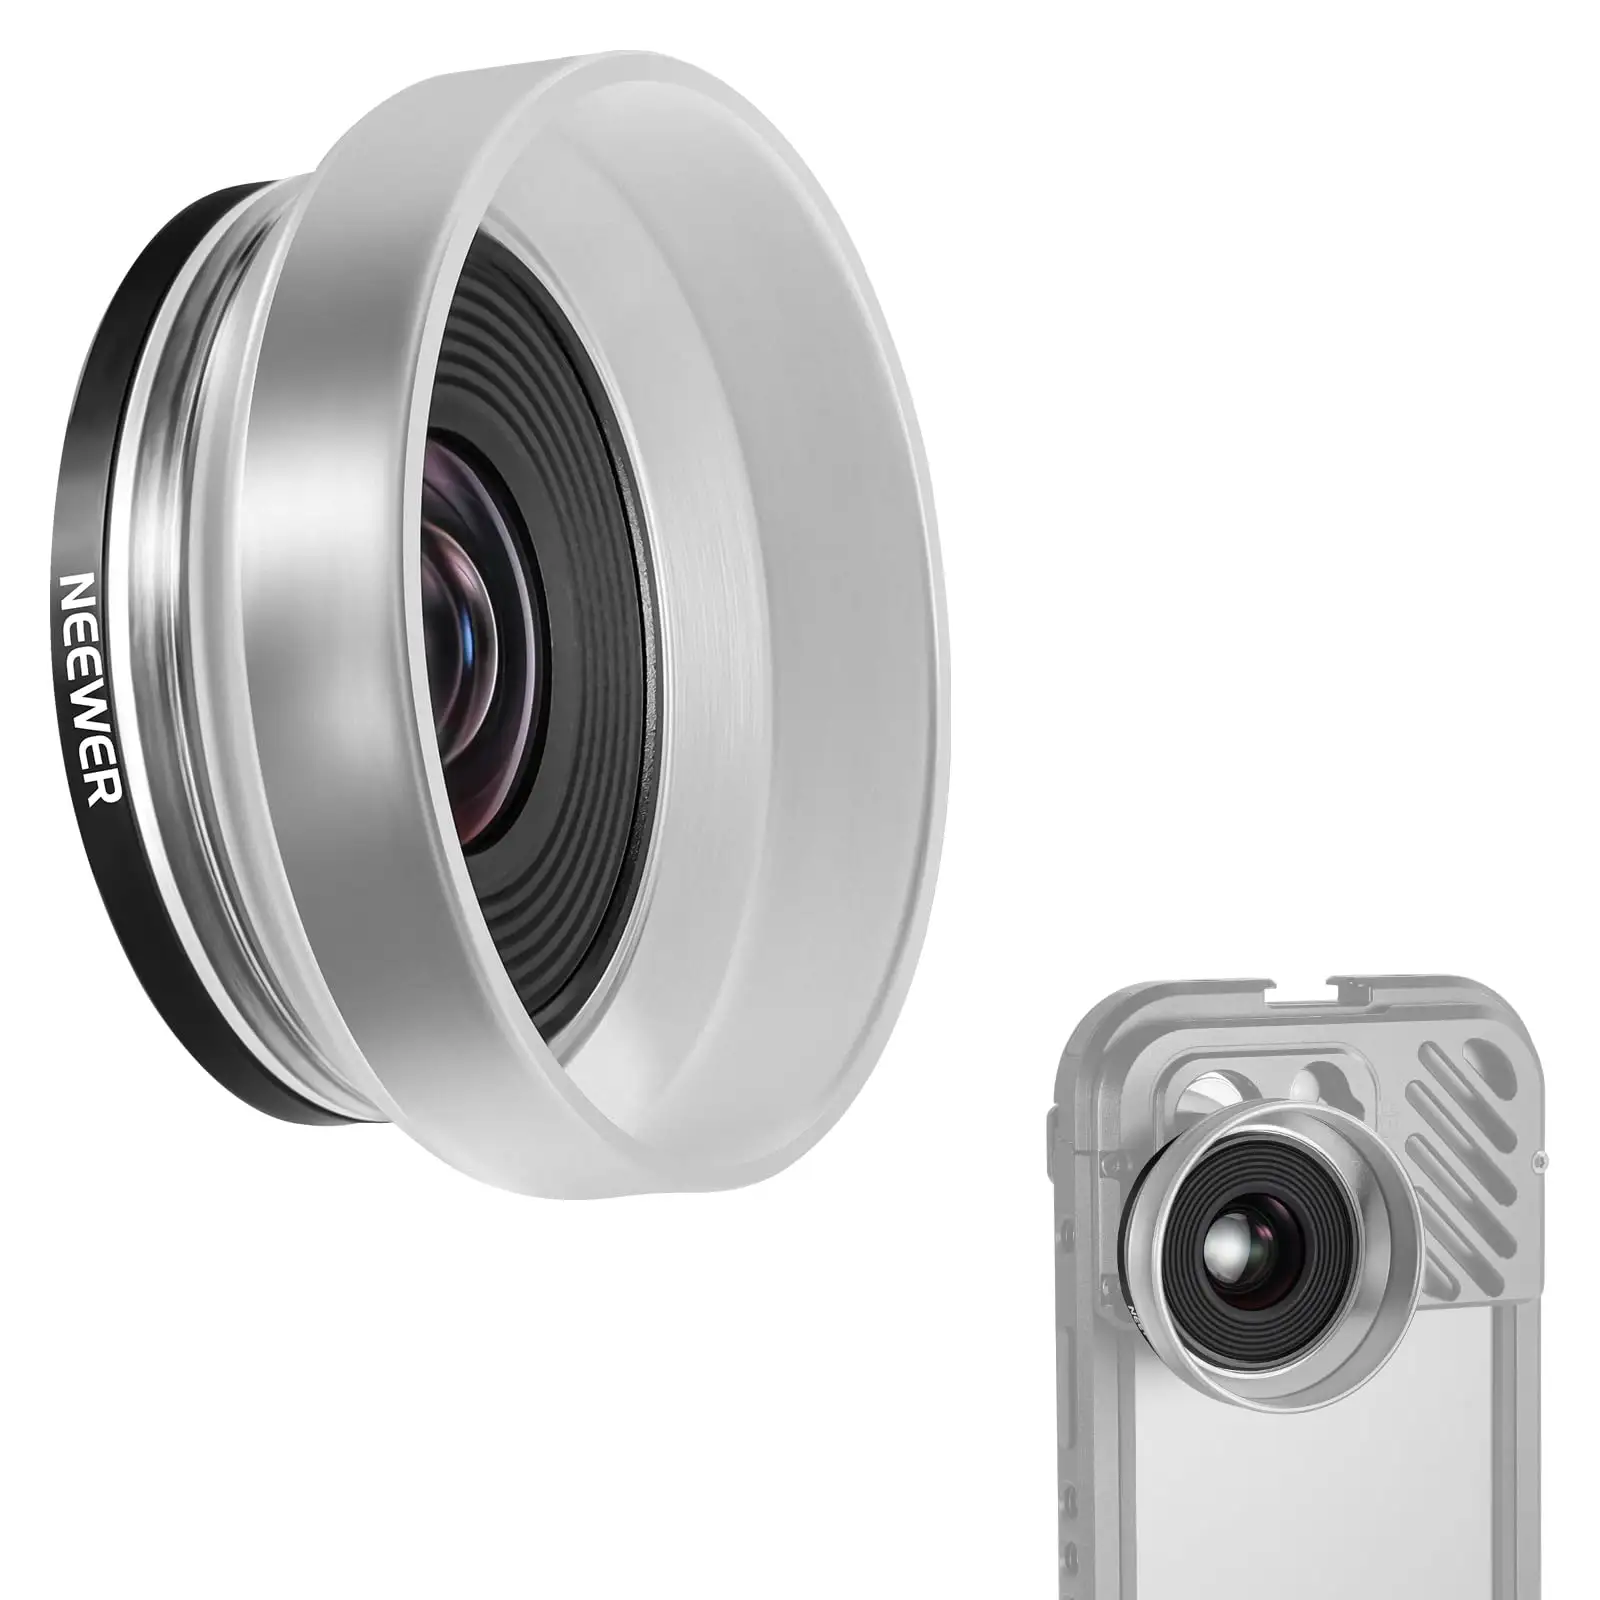 Hot Selling Lentes macro 10x Super Macro 10X Close Up Zoom Lens NEEWER 10X HD Macro Lens for 17mm Lens